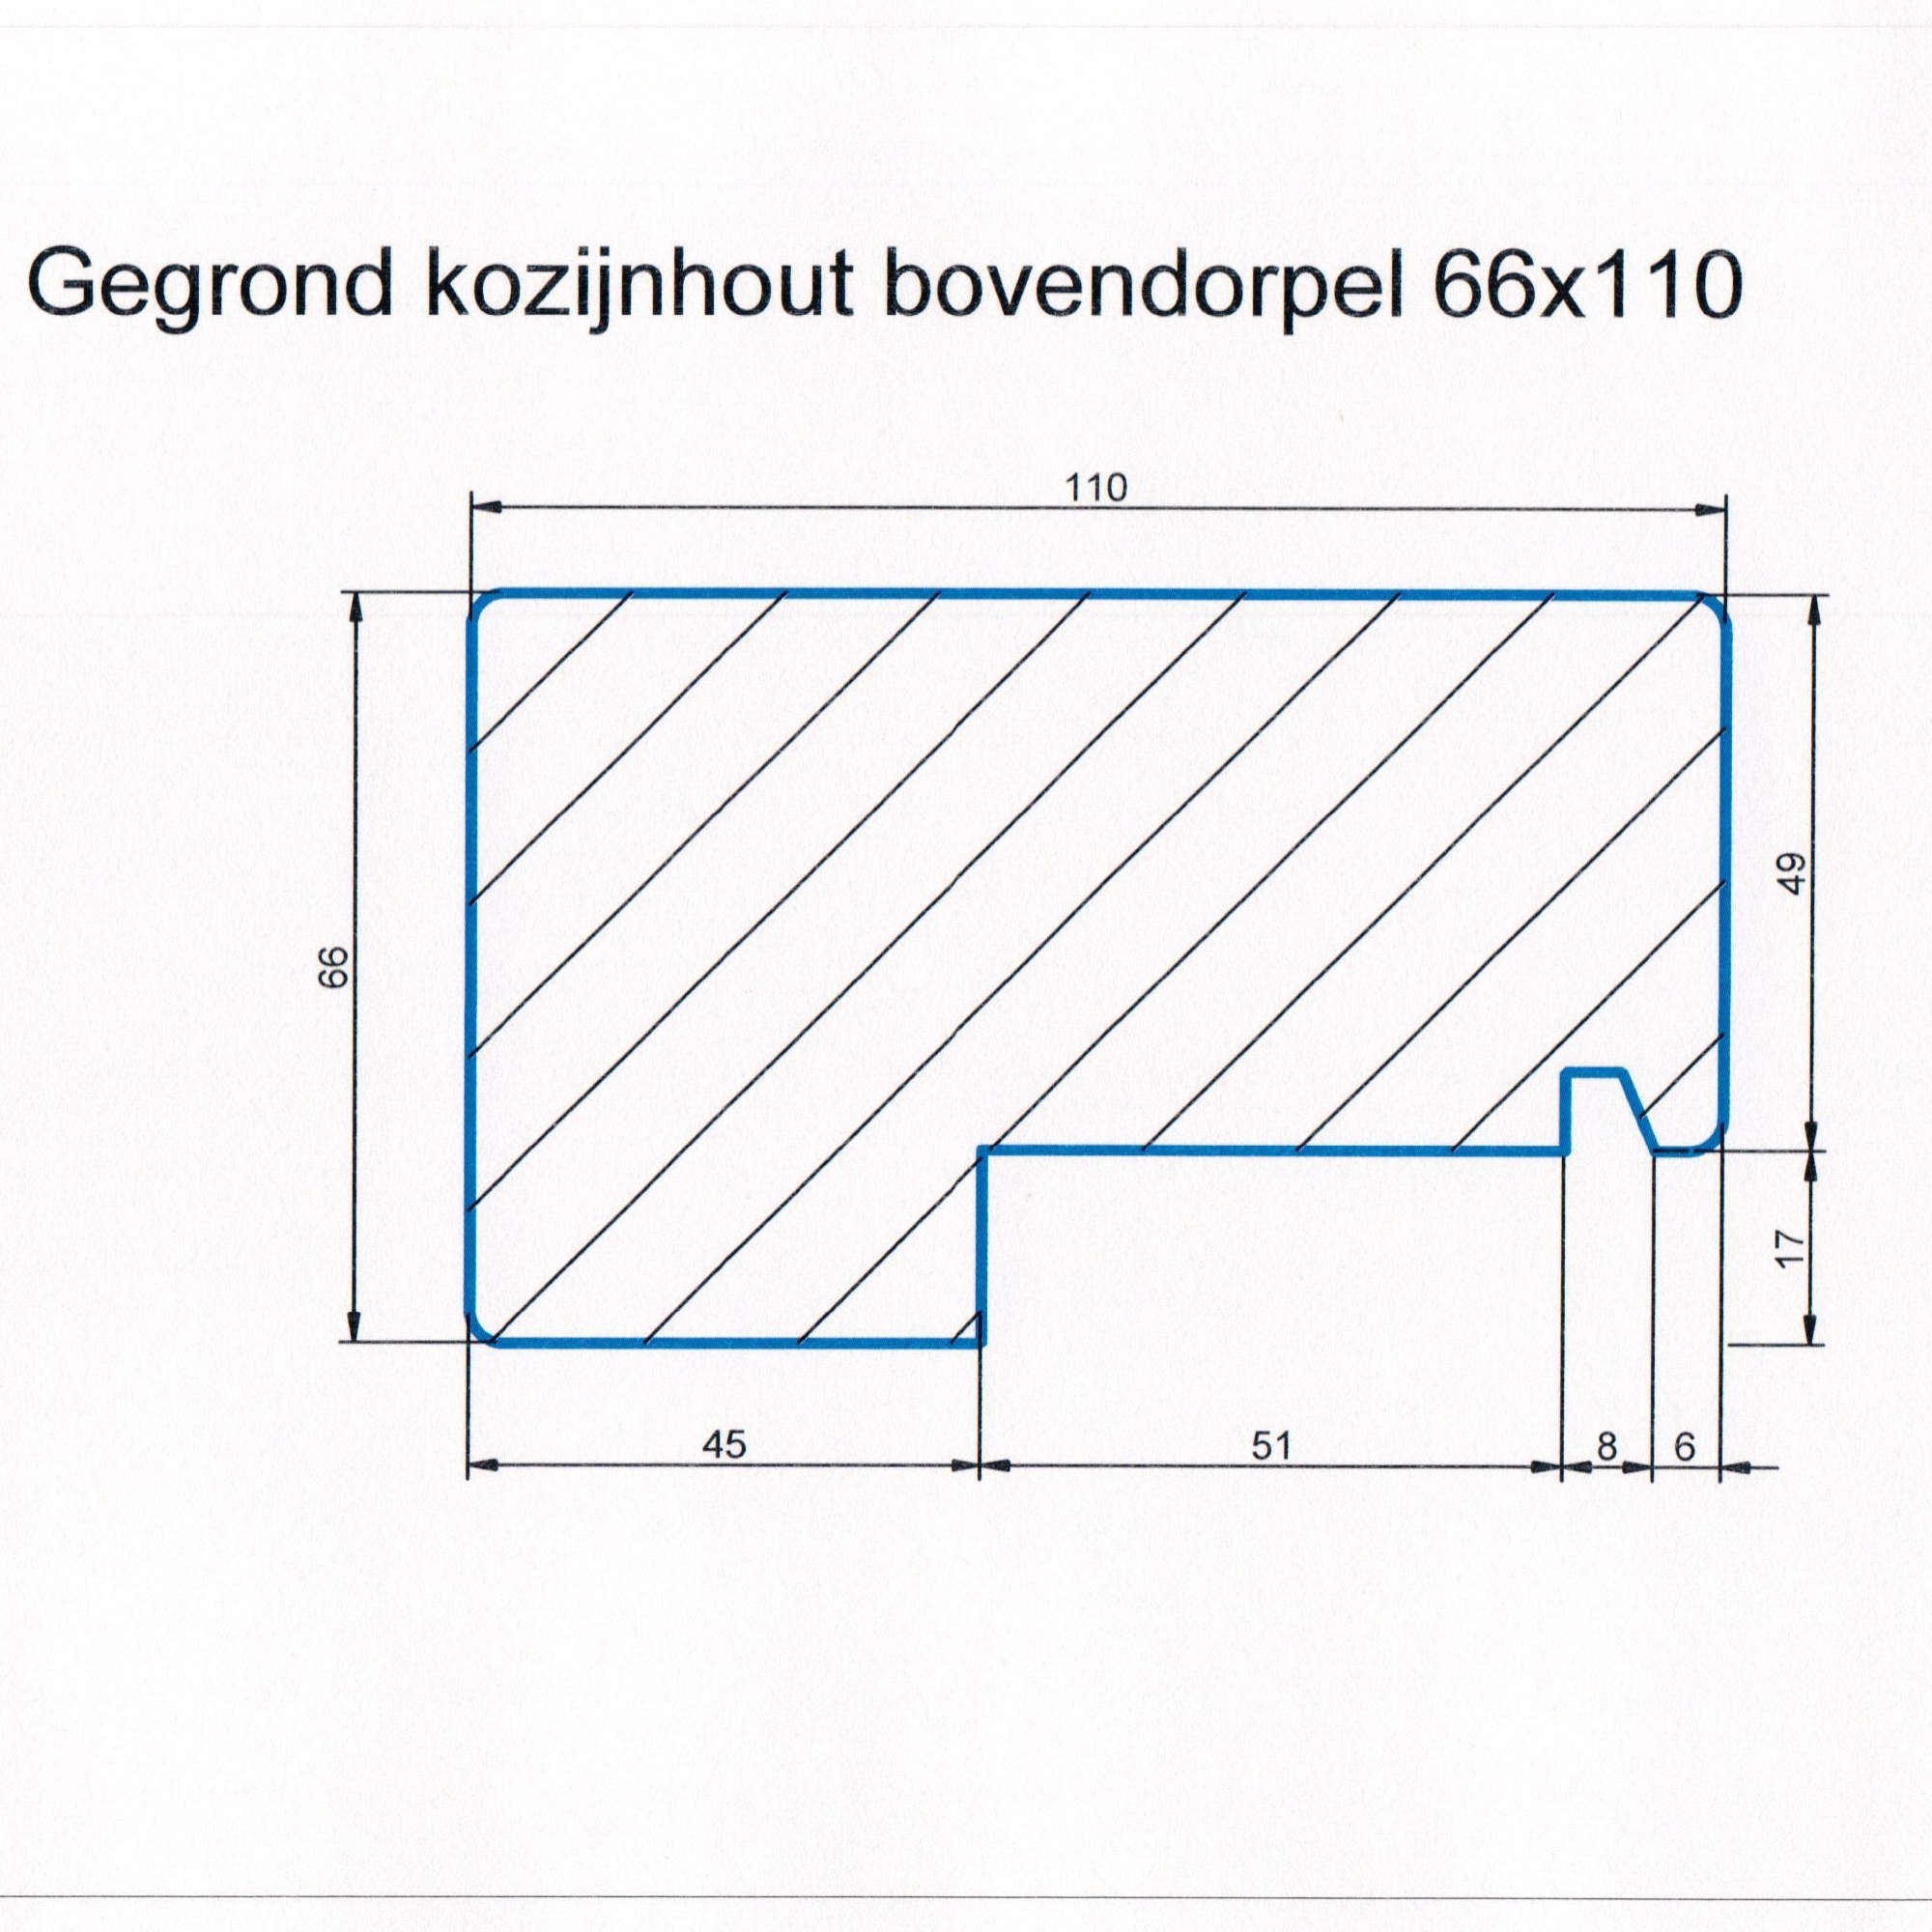 Hardhout 66x110 kozijnhout gegrond L=2360 bovendorpel